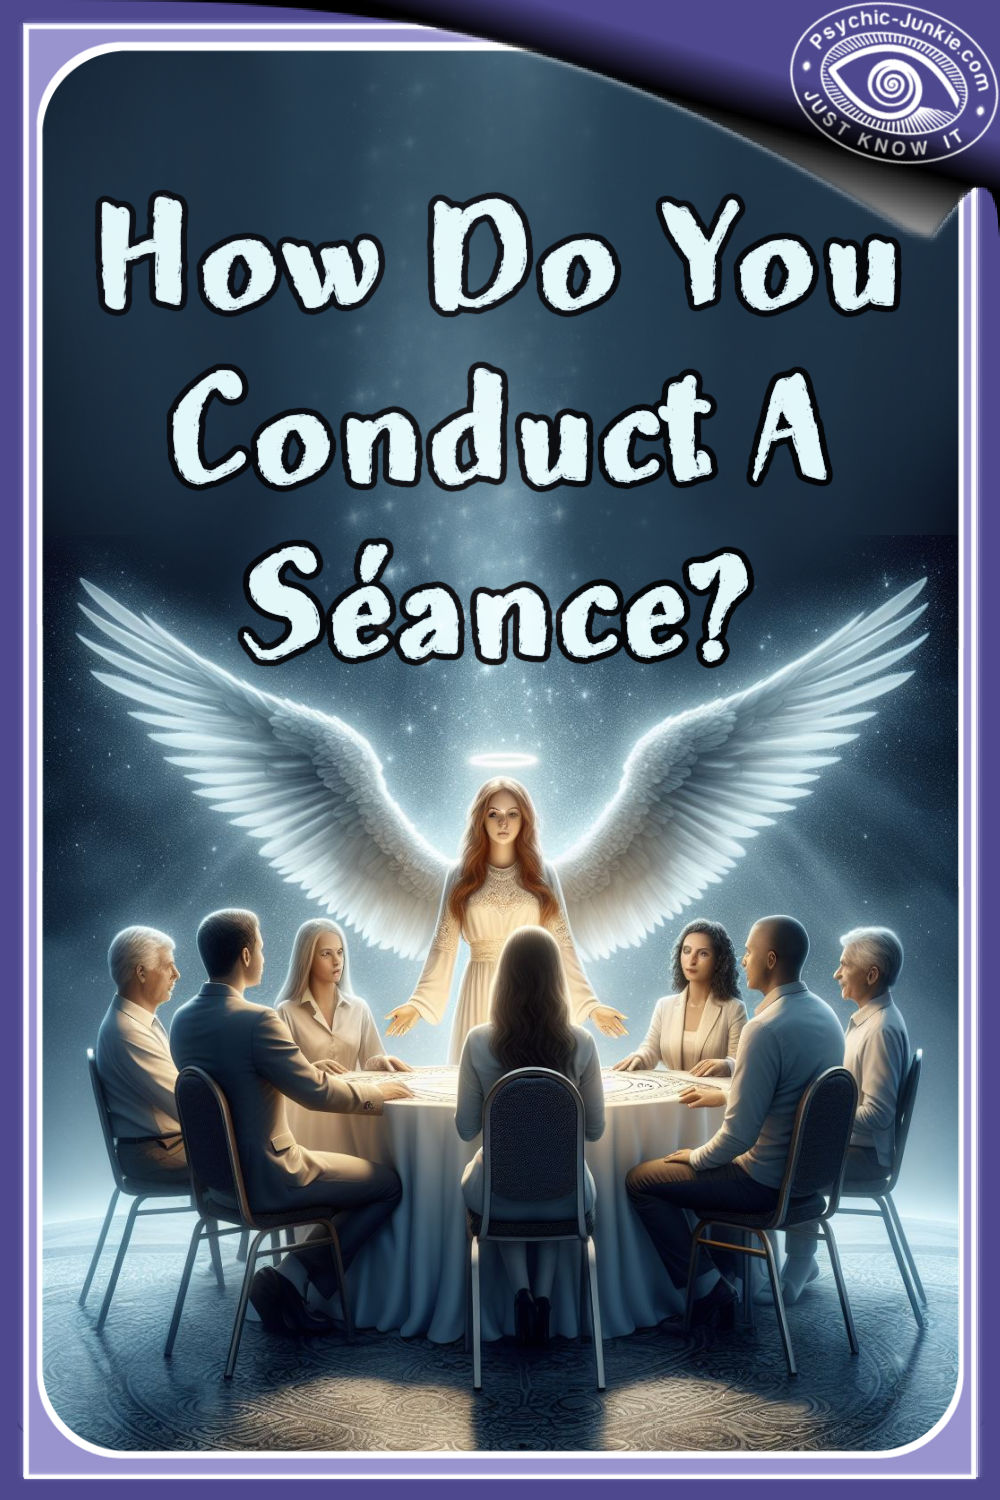 How Do You Conduct A Séance?